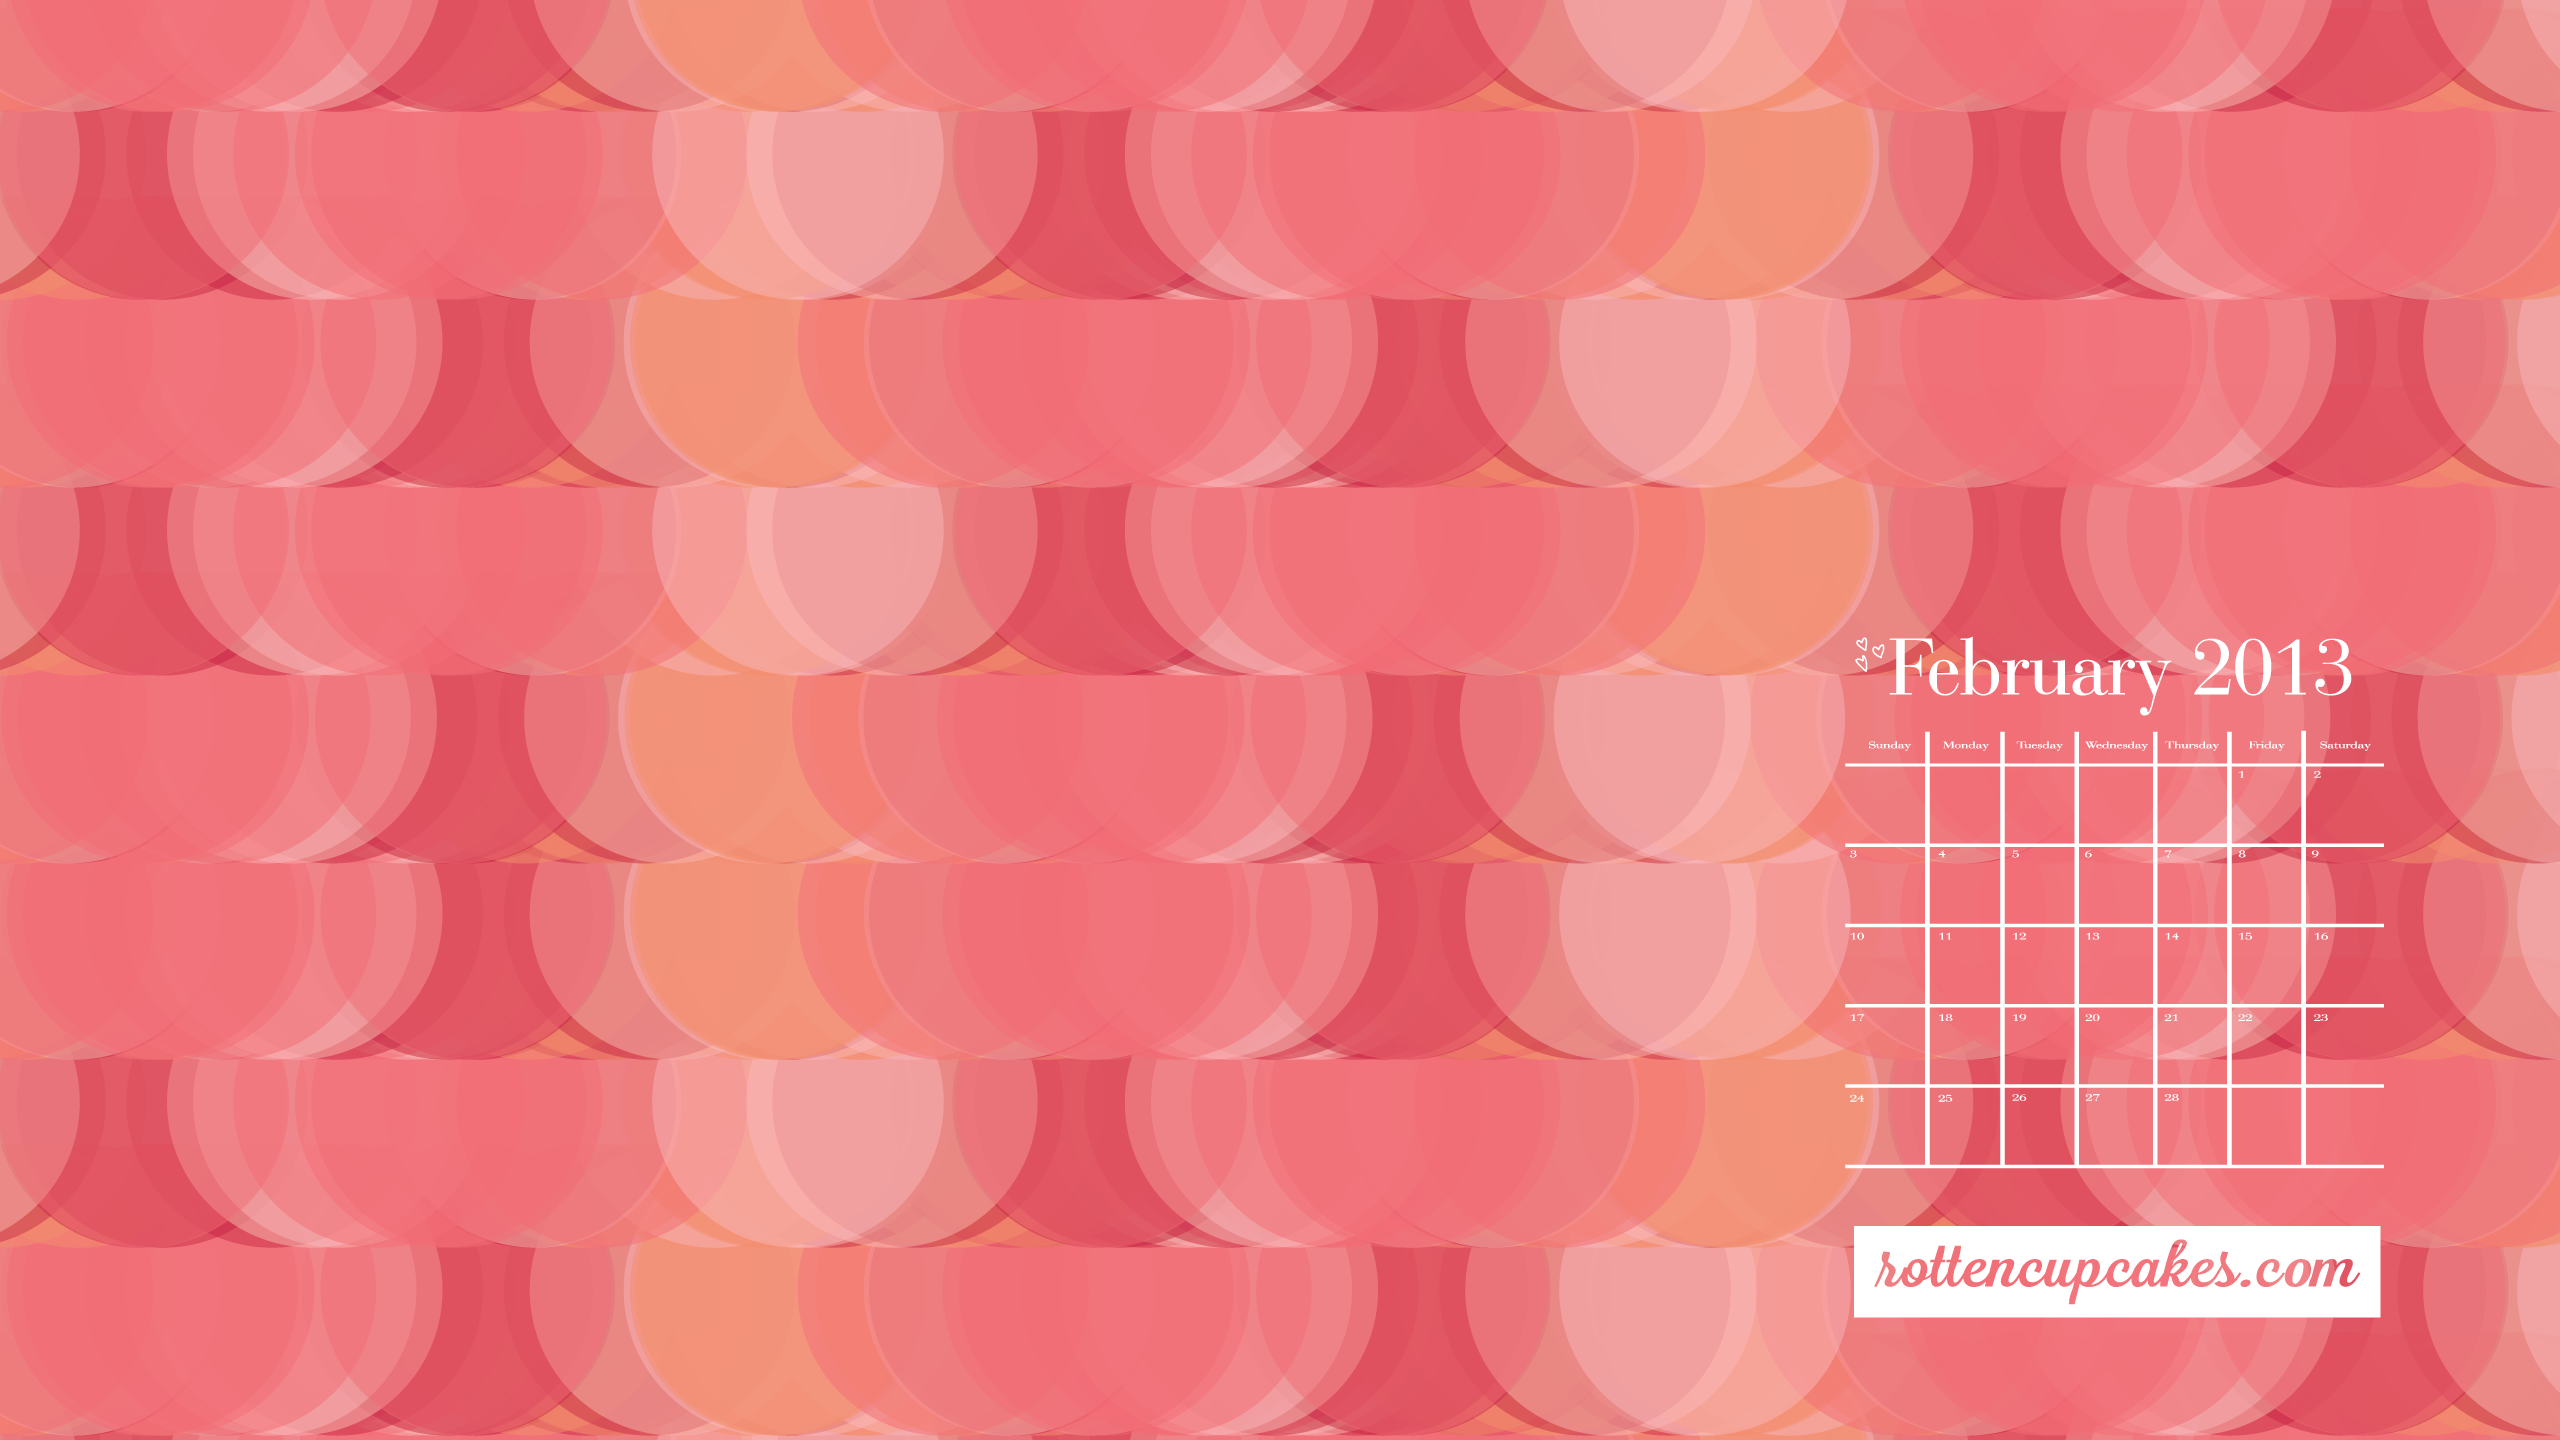 February Calendar Desktop iPhone Wallpaper Rottencupcakes